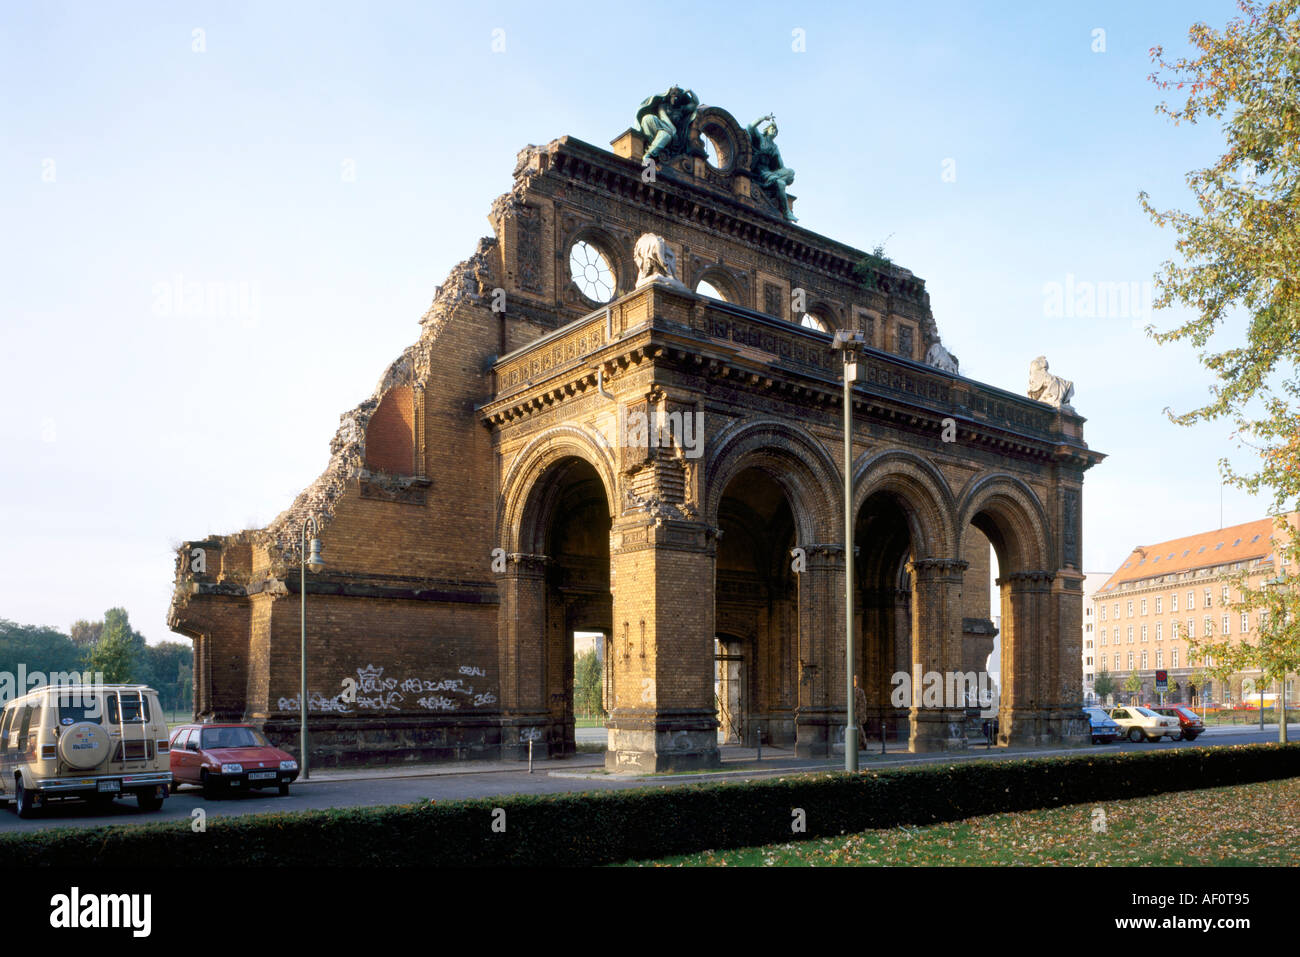 Berlino, Anhalter Bahnhof, Ruine des Portikus Foto Stock